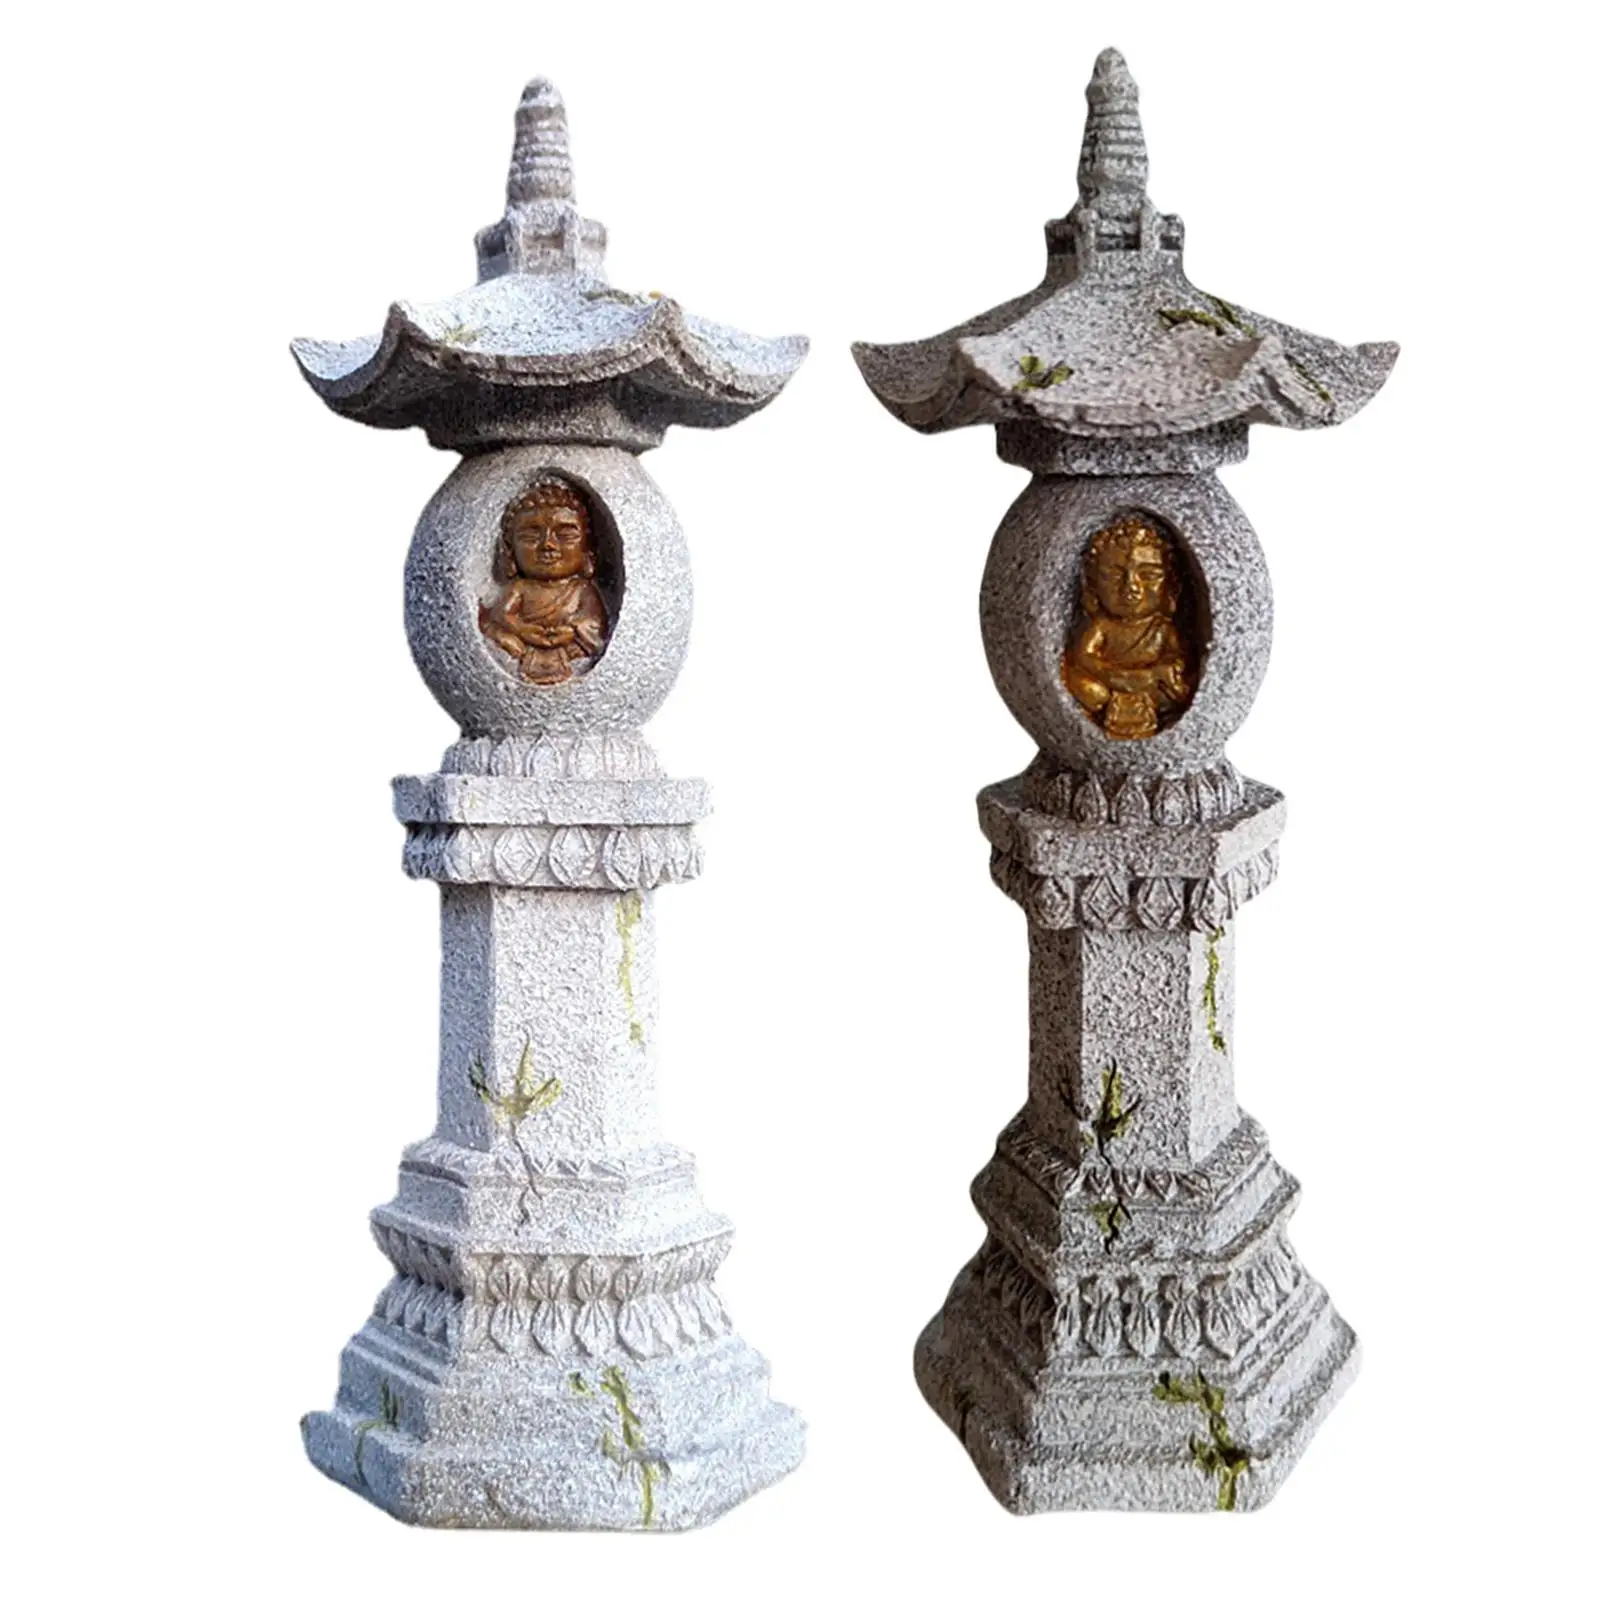 Fengshui Stupa Figure Tathagata Praying Handcrafted Decorative Buddhist Buddha Religious Ornament Pagoda Decor for Tabletop